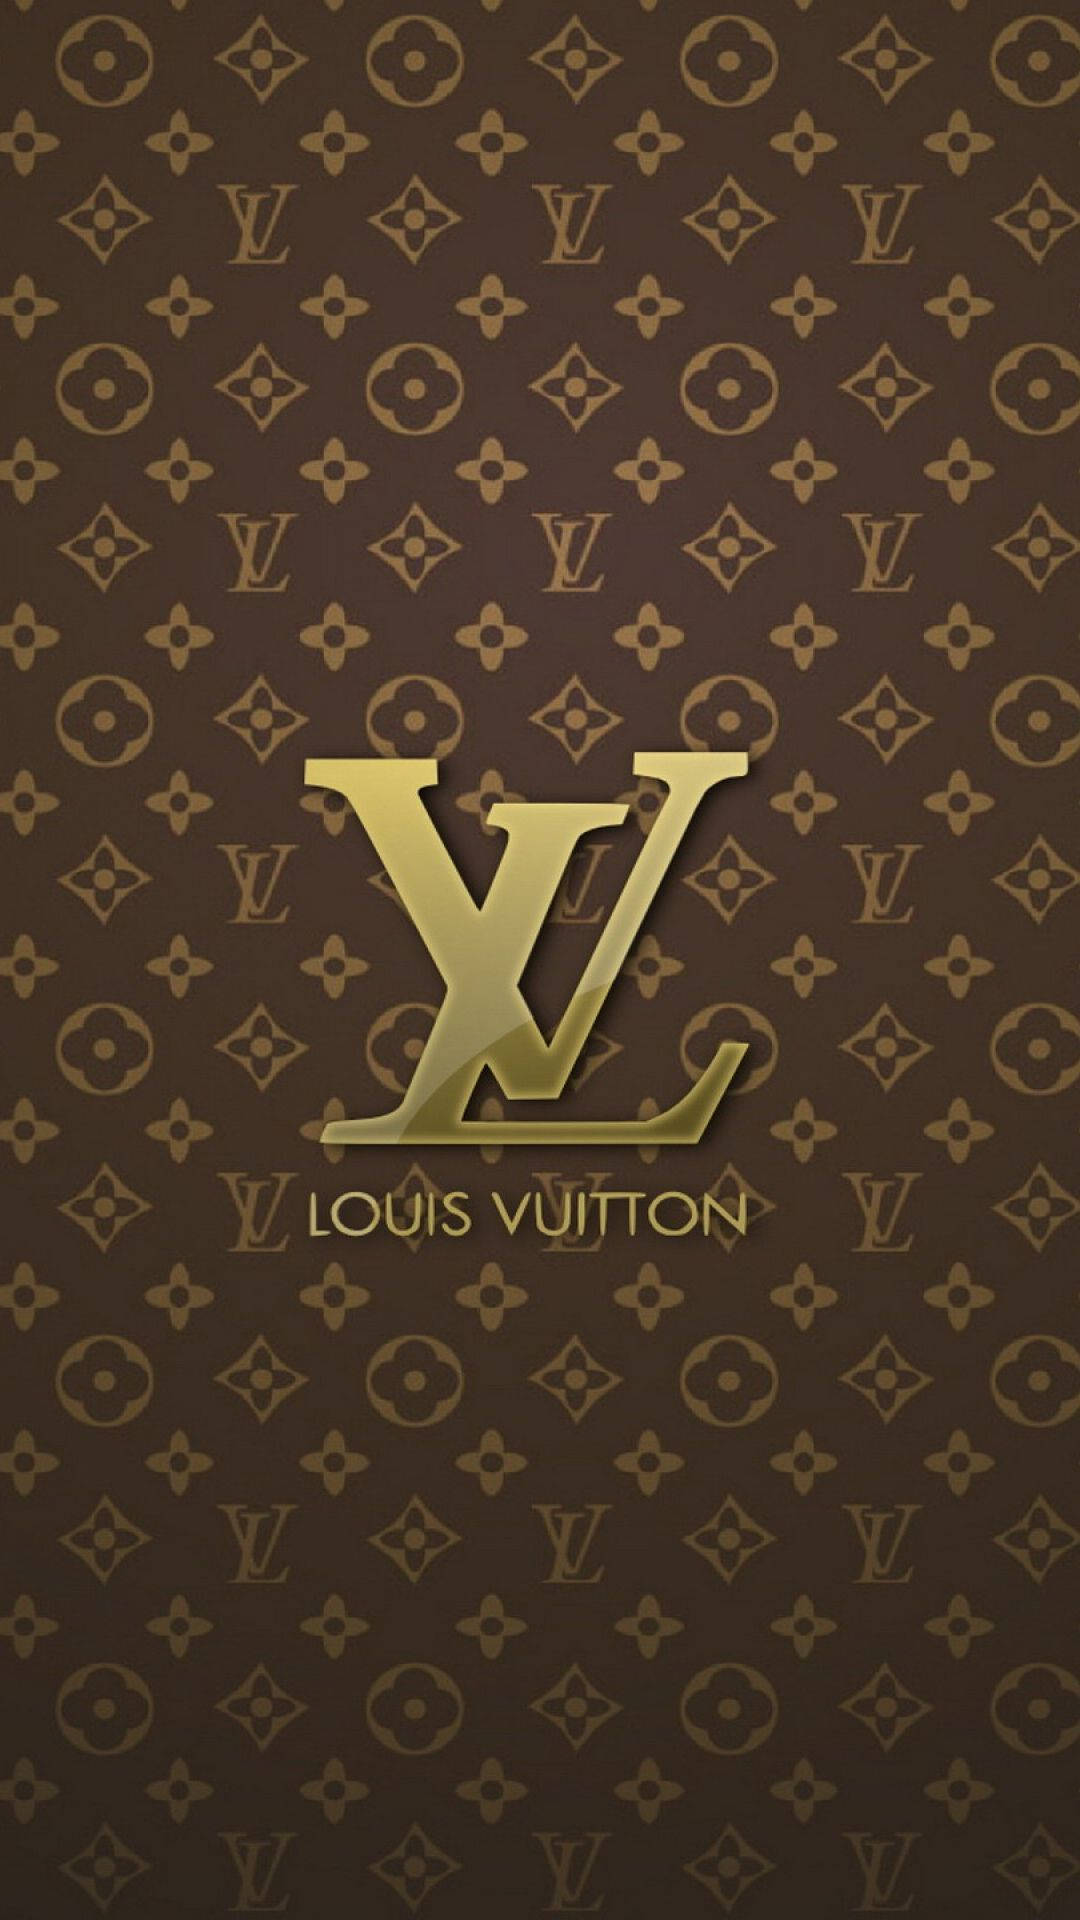 Louis Vuitton Gold Monogram Background